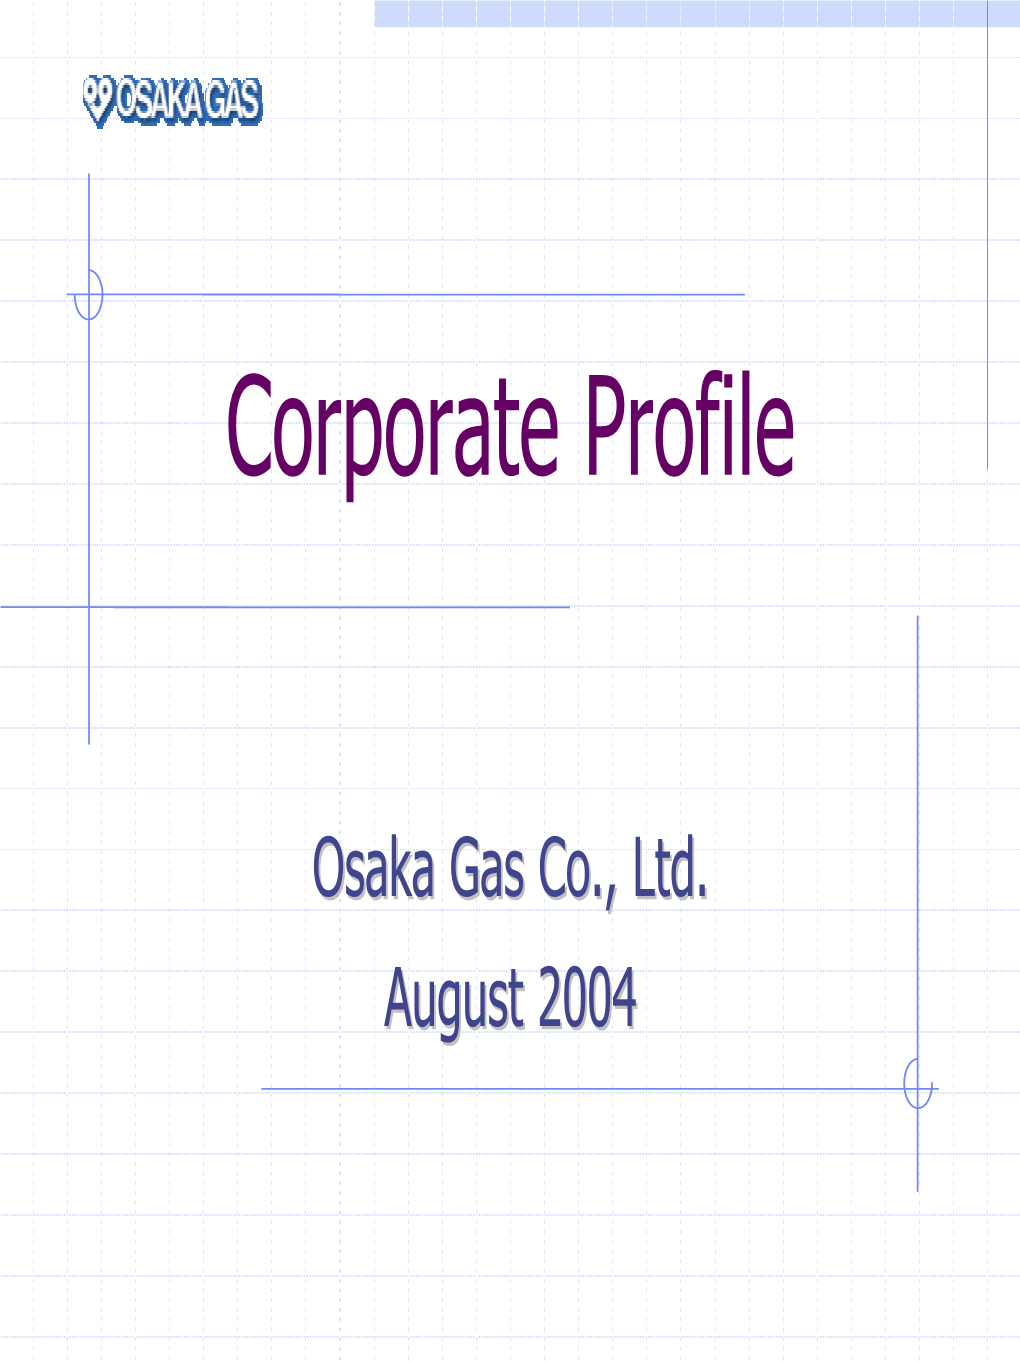 Osaka Gas: a Century of Experience